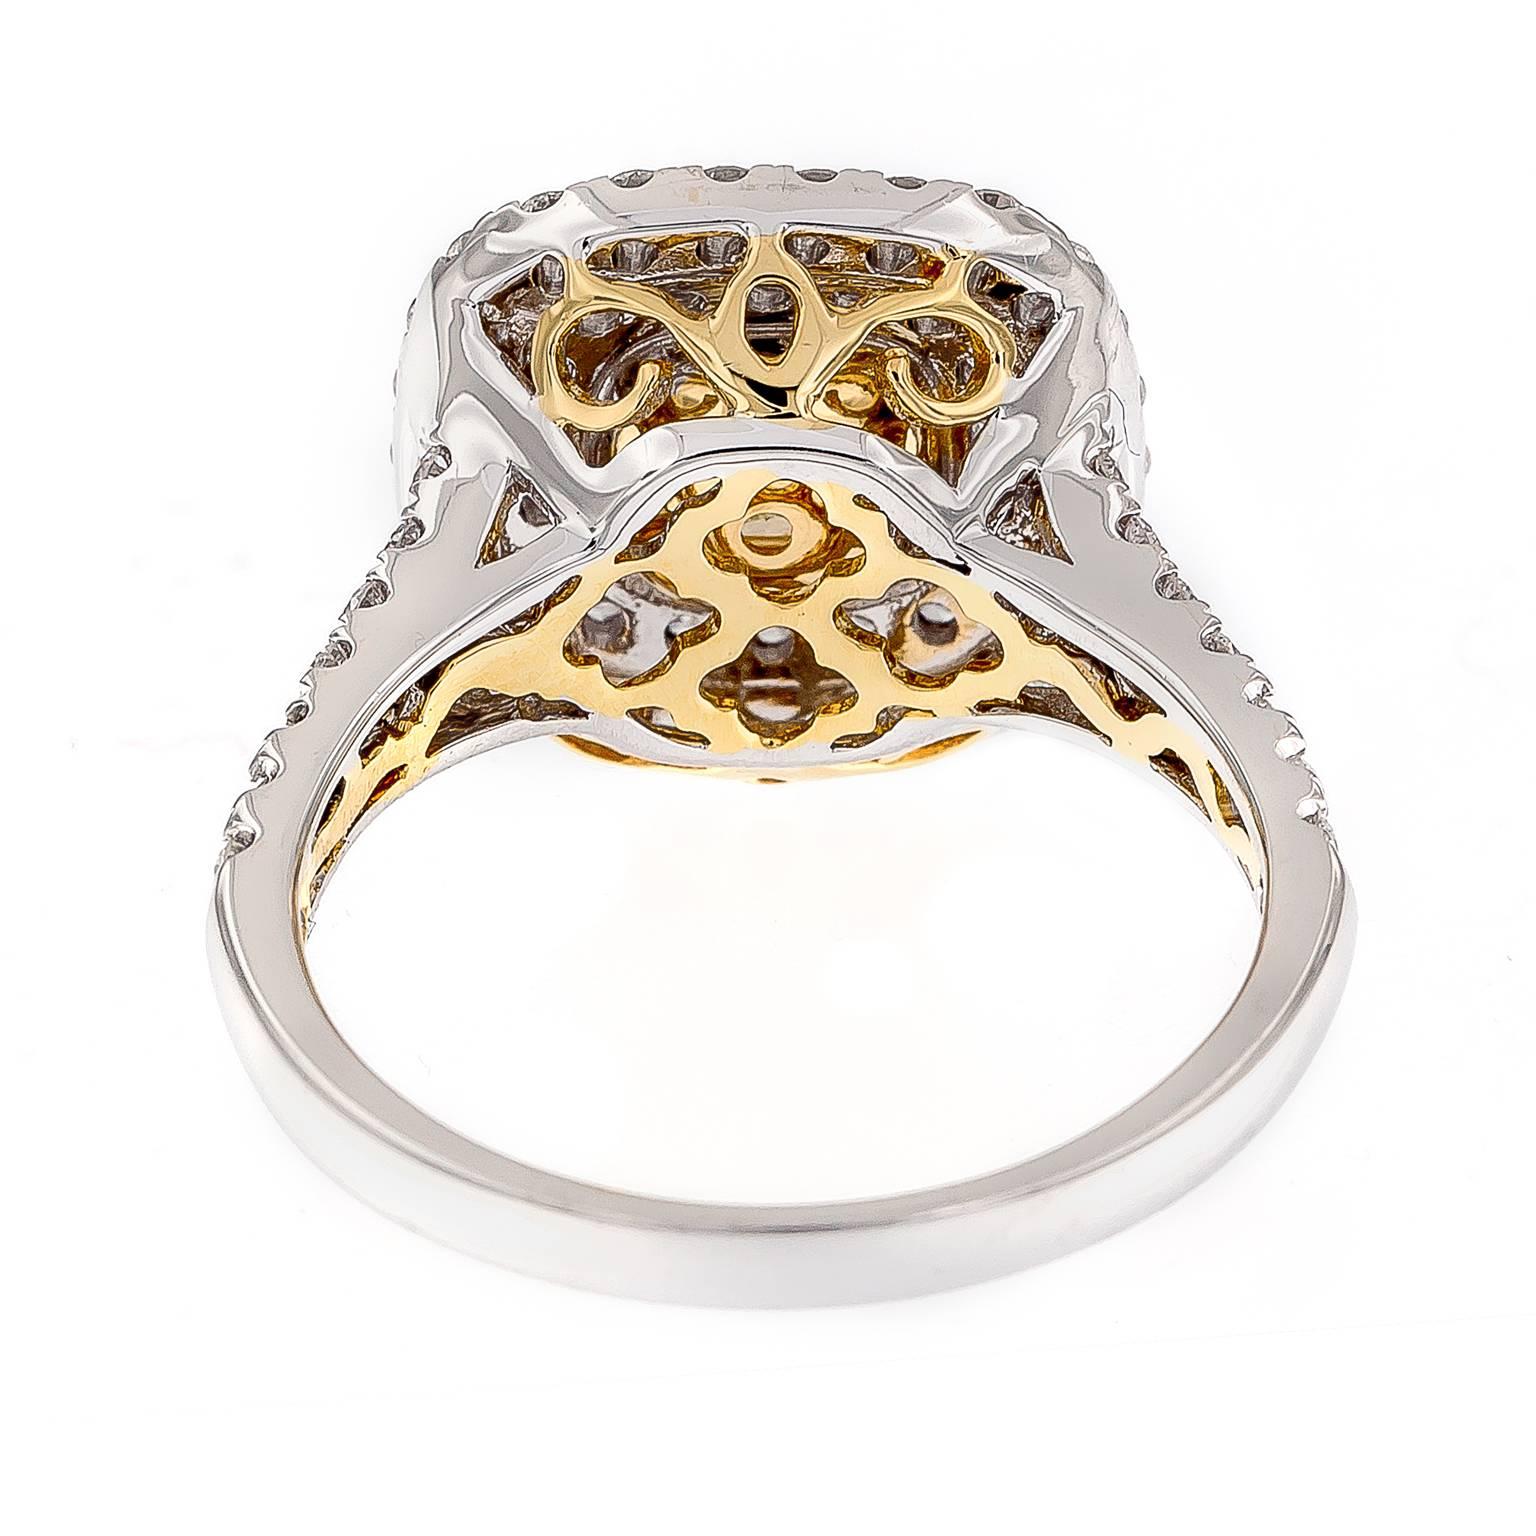 Cushion Cut GIA Certified Fancy Intense Yellow Diamond 18 Karat White Gold Halo Ring